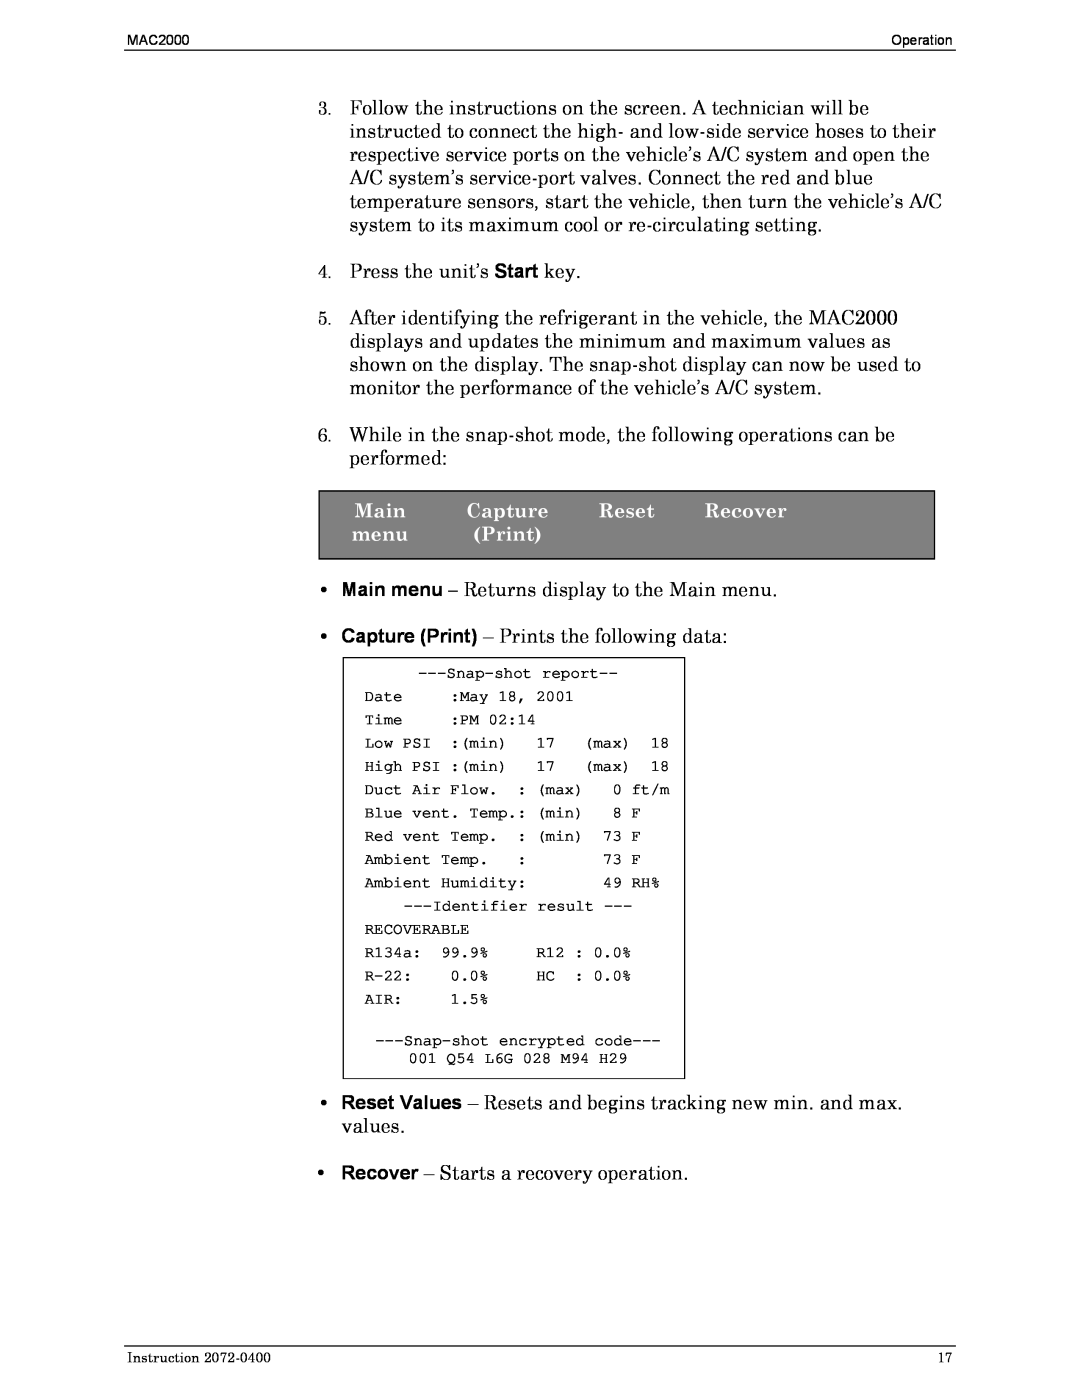 Bacharach 2072-0400 manual Capture, Reset, Recover, Print, Main, menu 